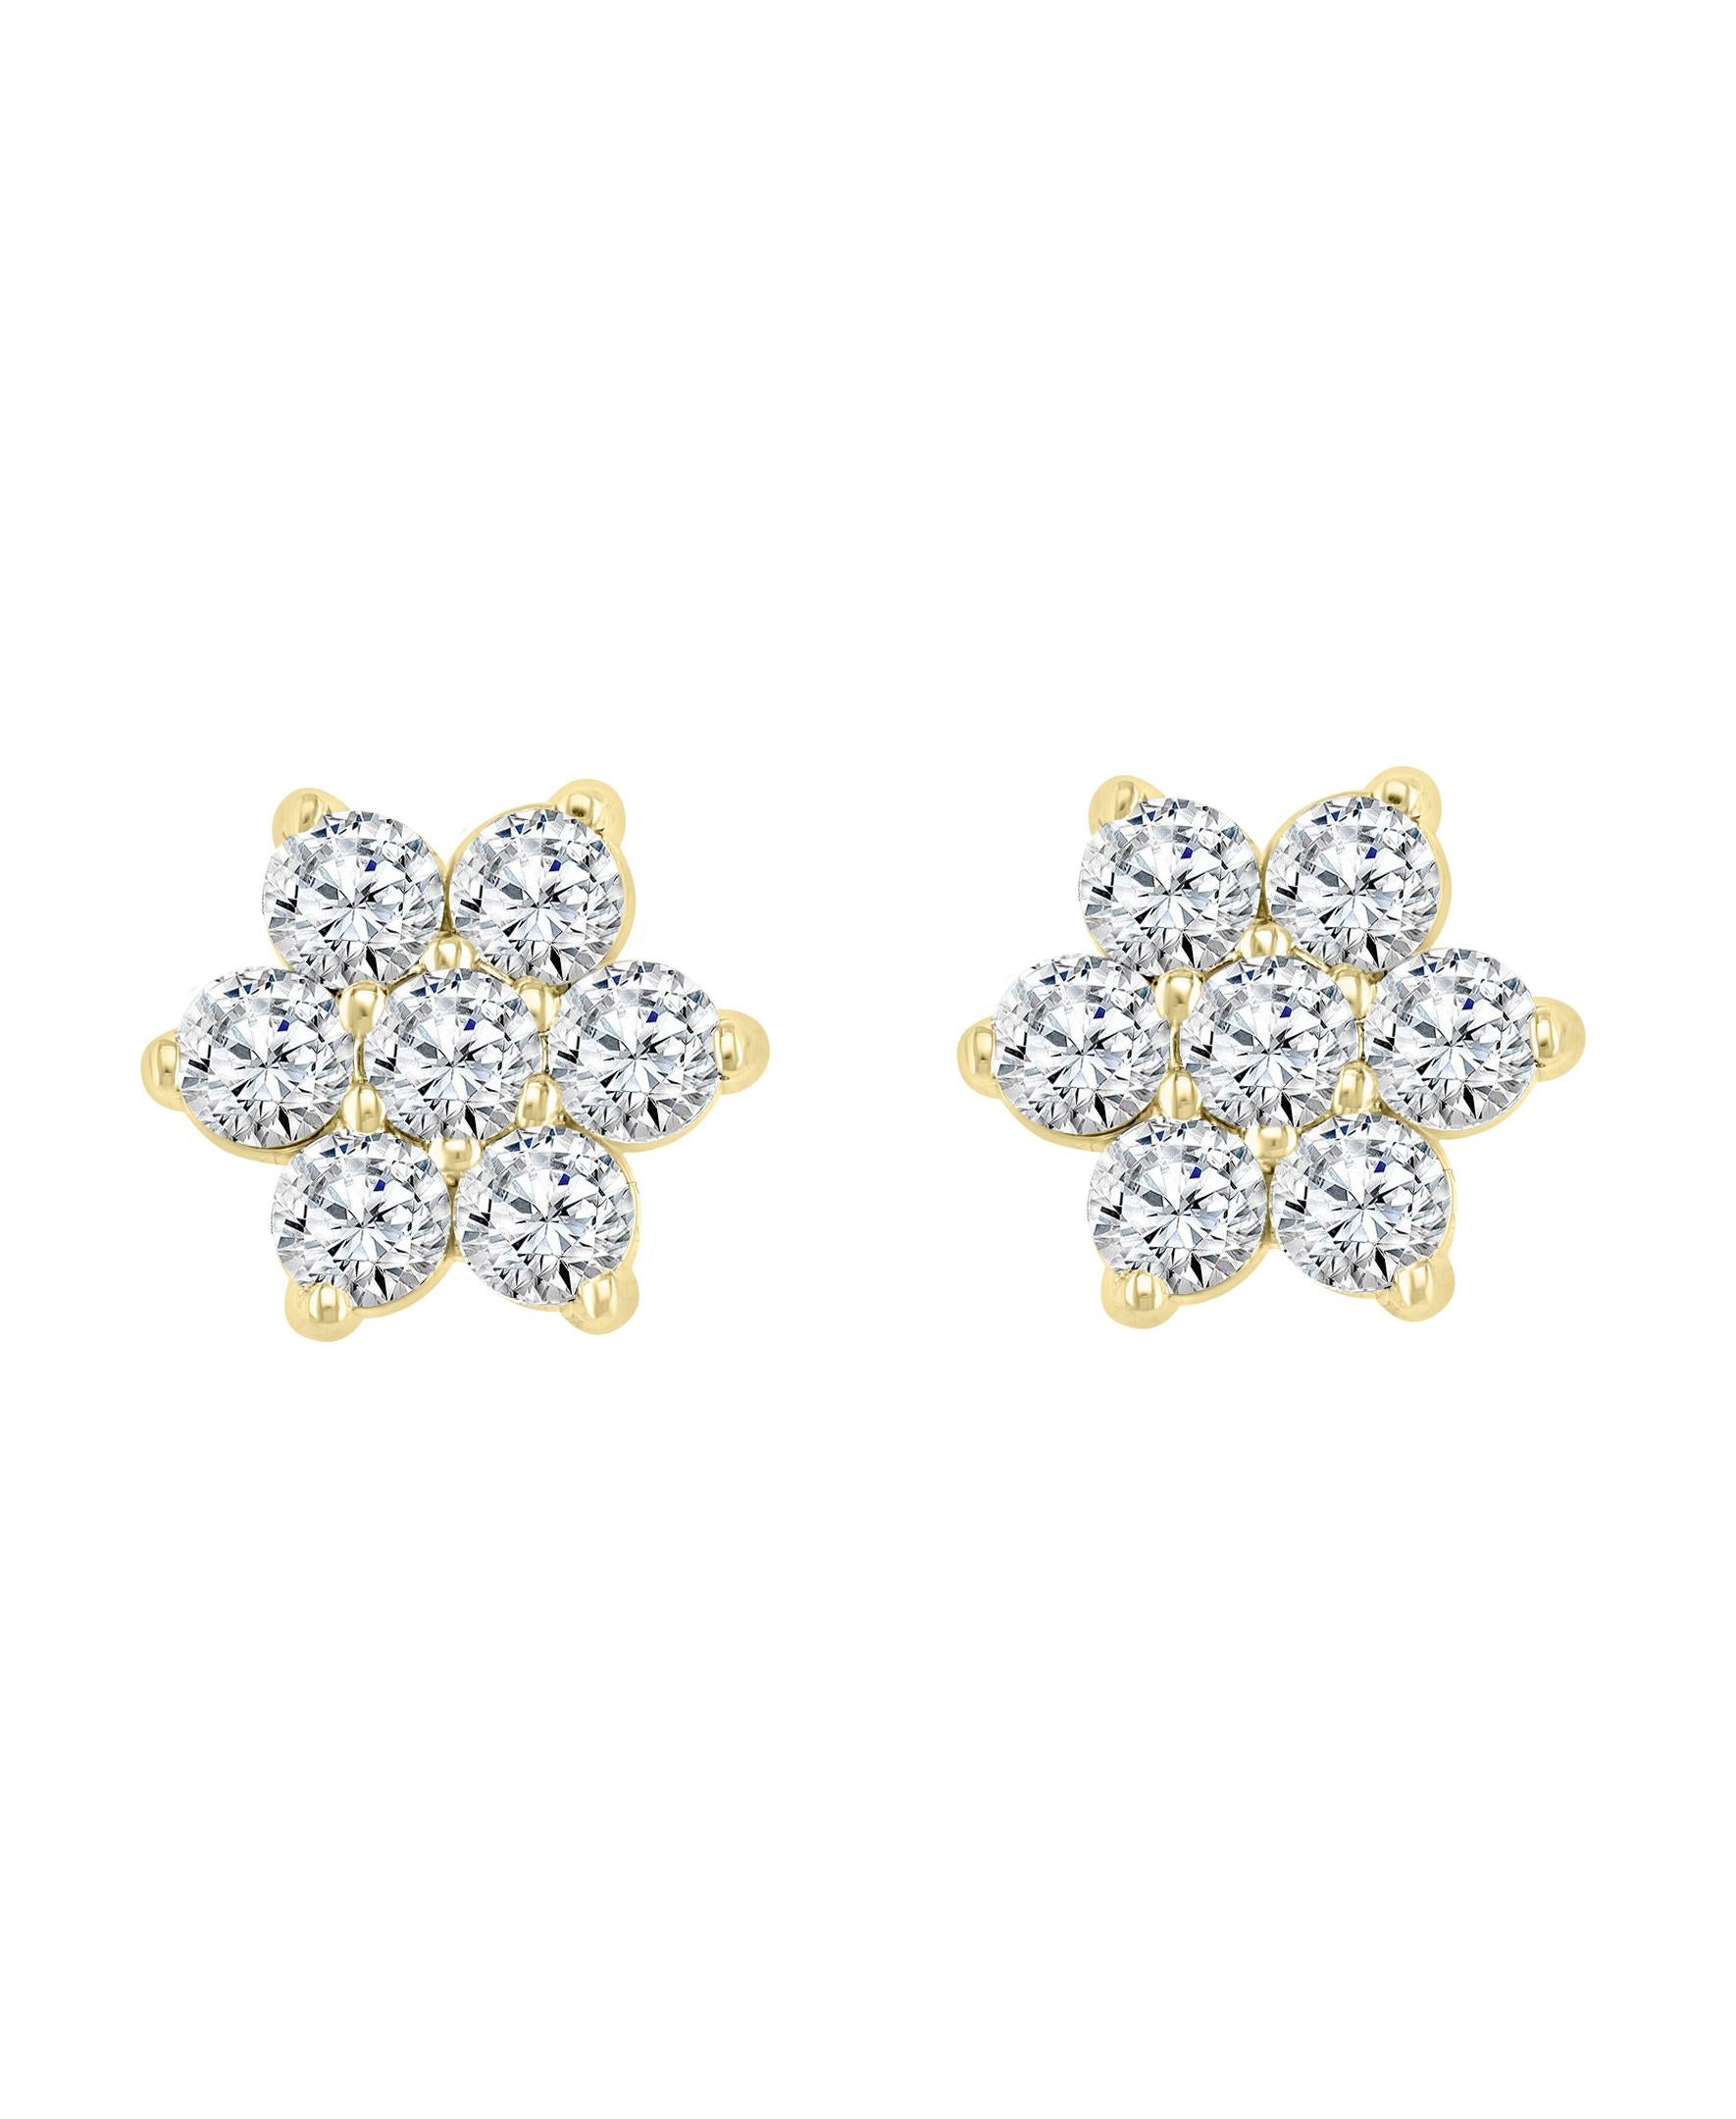 2.80 Carat 7 Diamond Floral Cluster Flower Stud Earrings in 14 Karat Yellow Gold For Sale 6